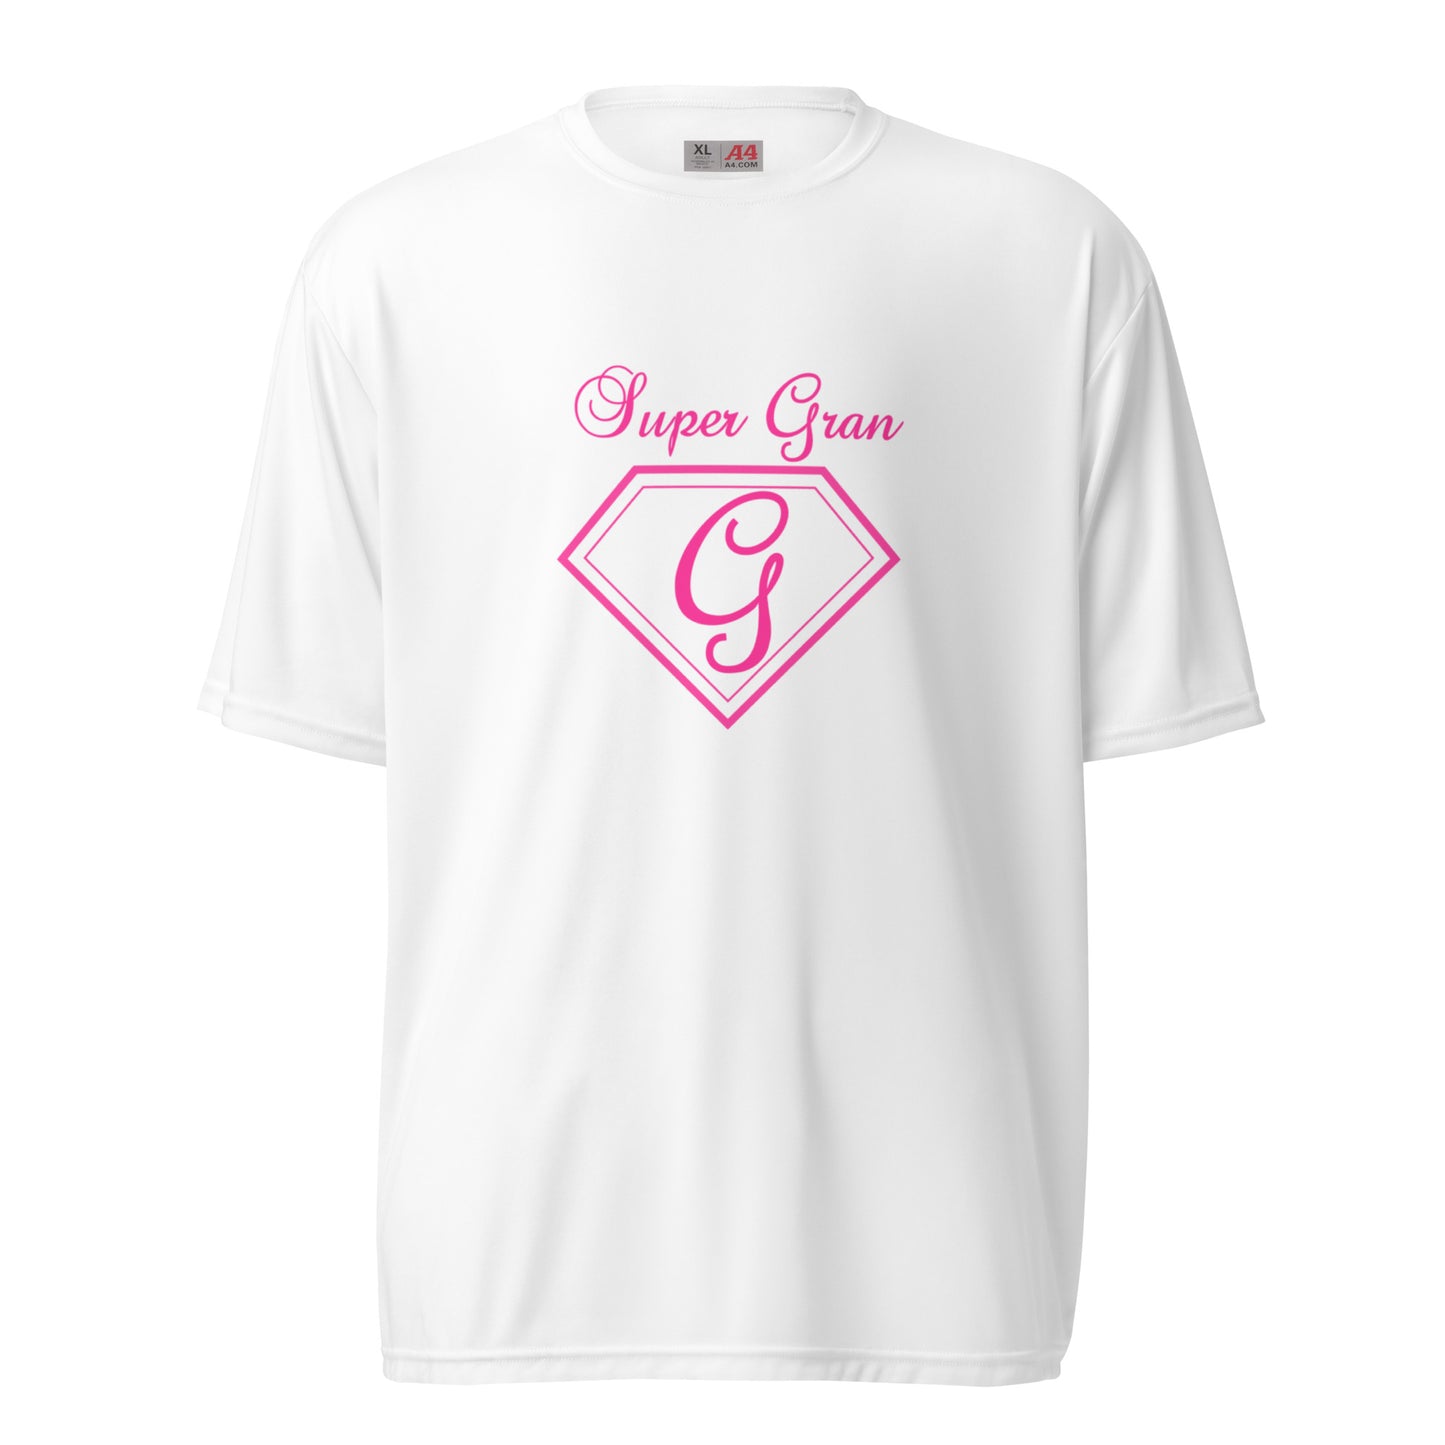 Super Gran unisex performance crew neck t-shirt - Pink Print